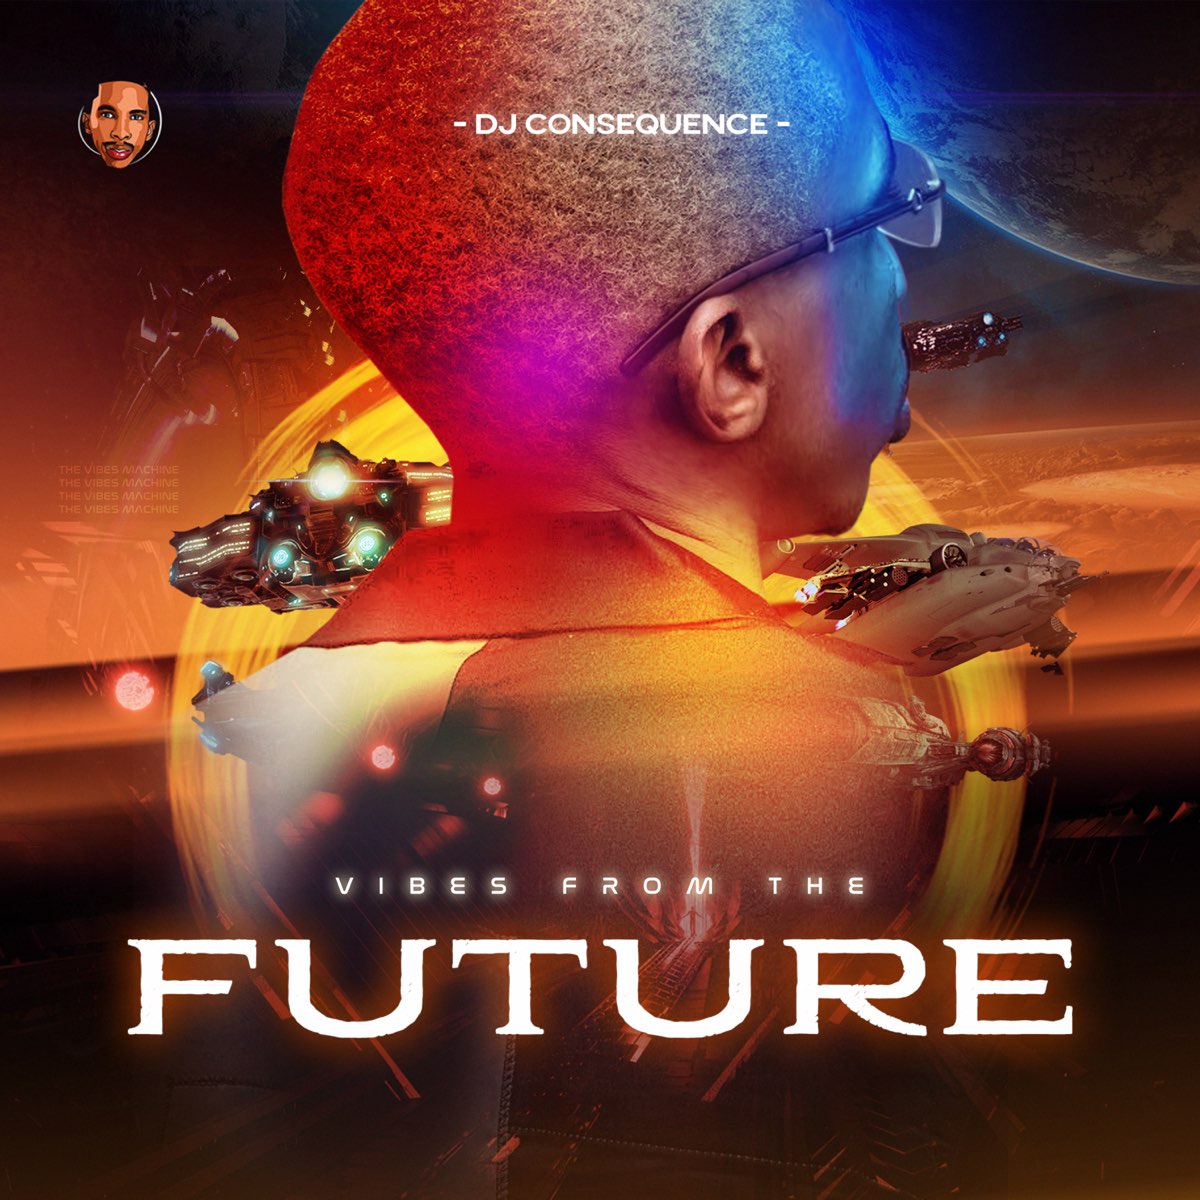 Dj futures. Future и DJ Эулер. Consequences музыка.